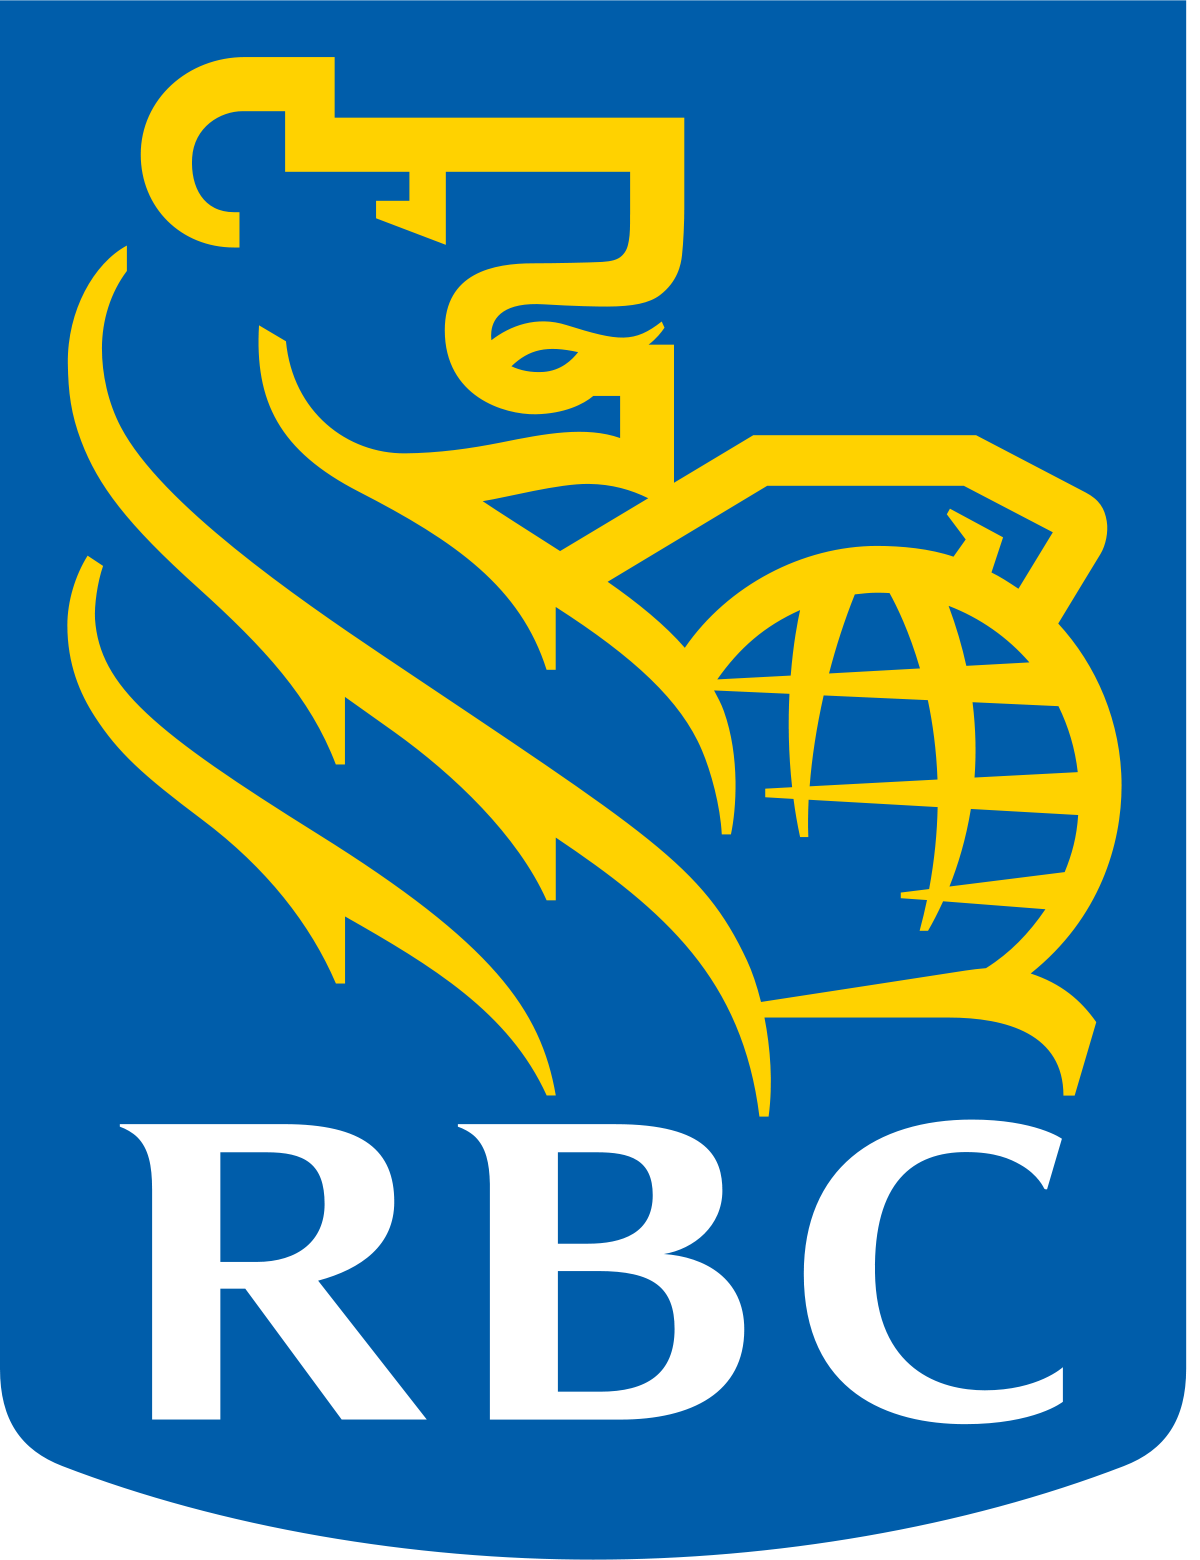 Rbc Corporate Services Hong Kong